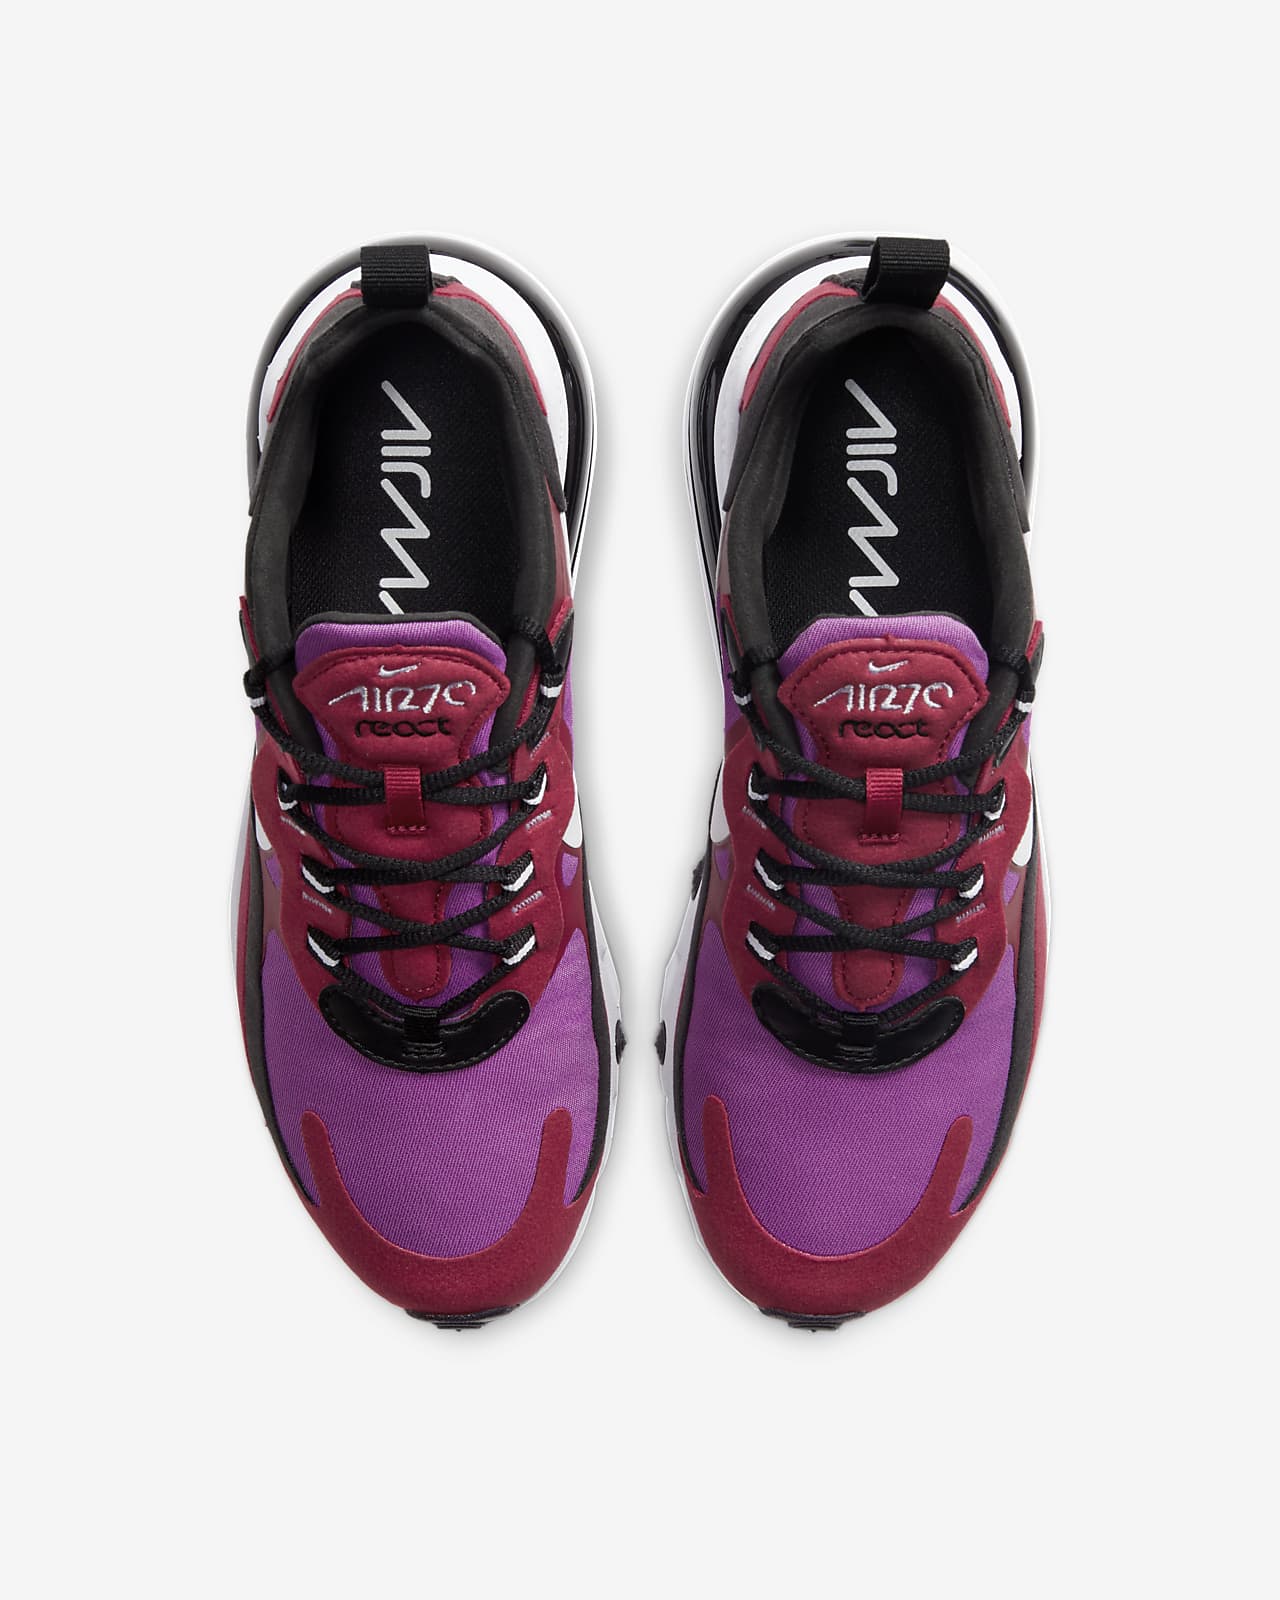 nike air max 270 pink purple